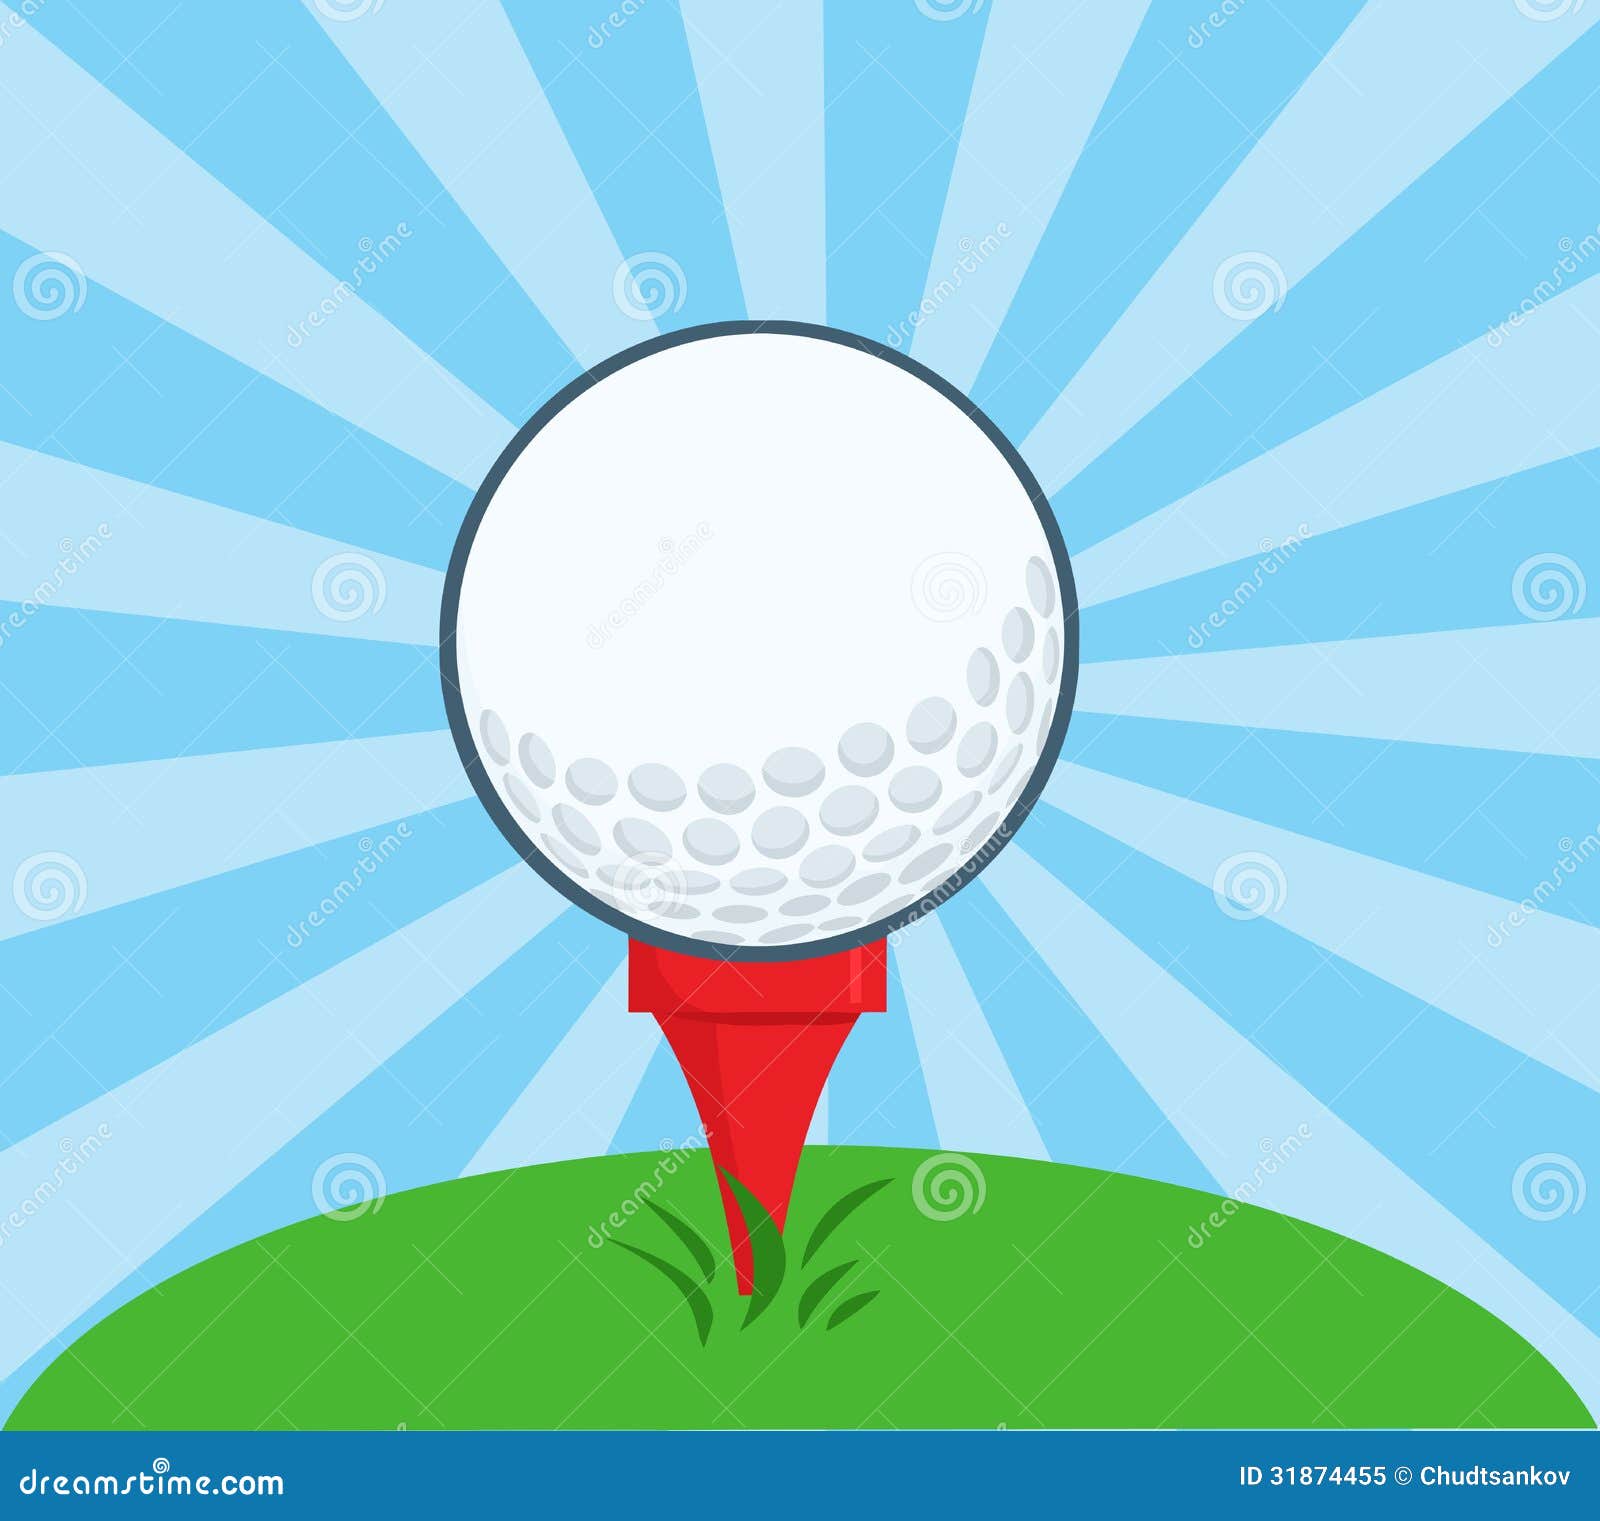 cartoon golf ball clipart - photo #49